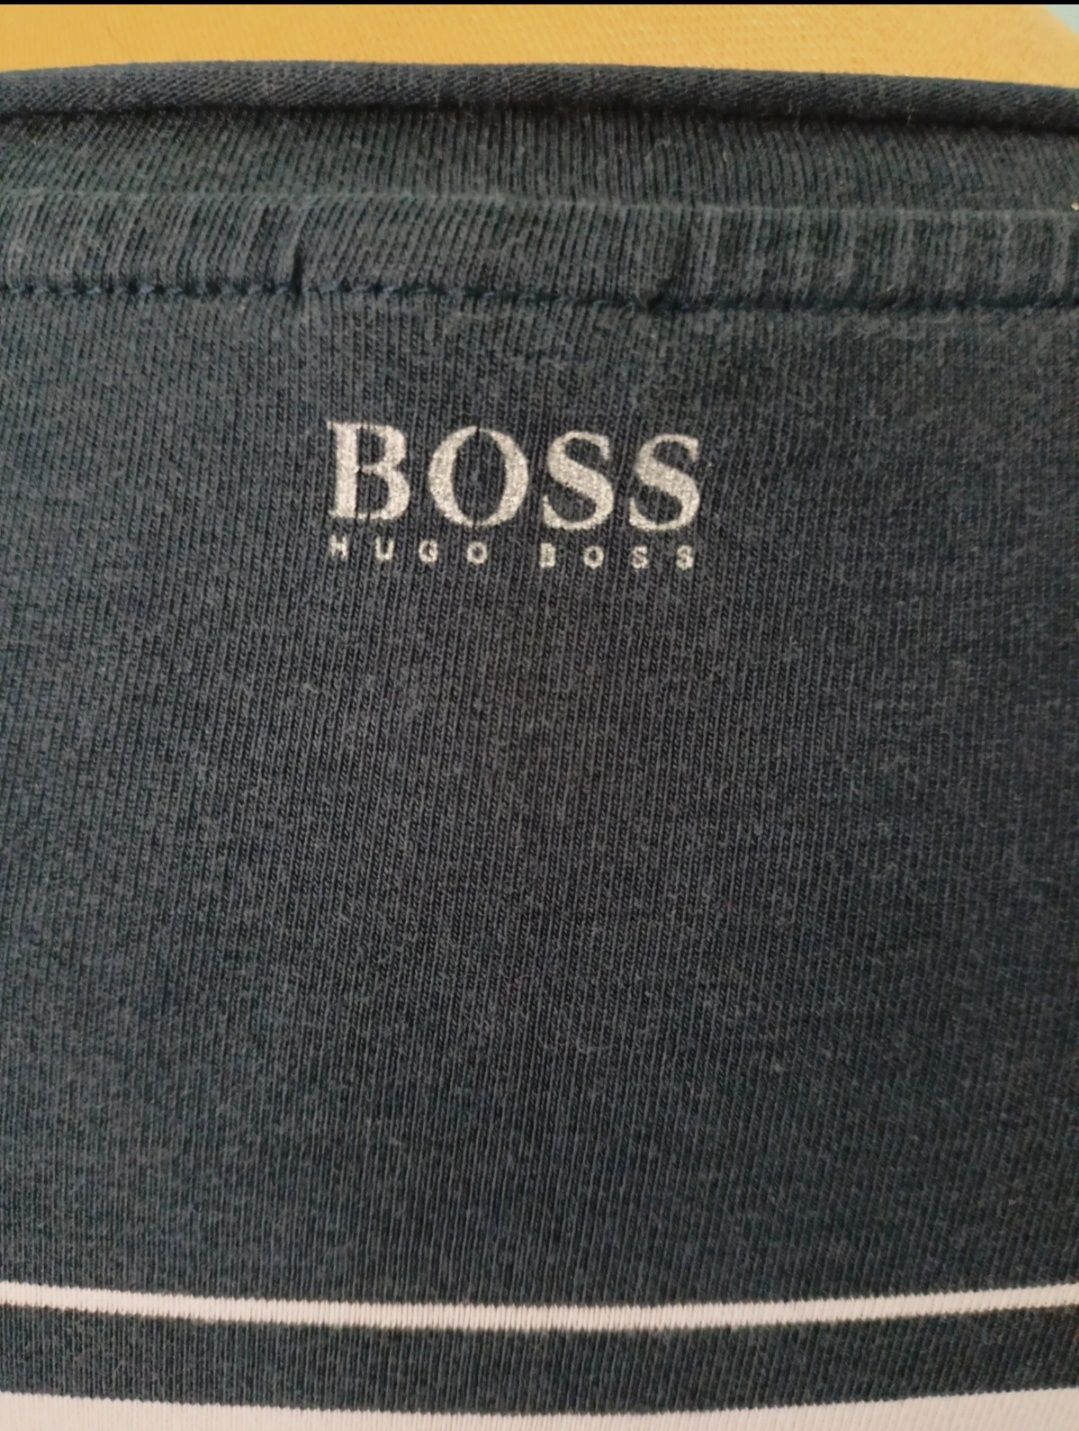 Bluzka damska Hugo Boss, koszulka z rękawem 3/4, t-shirt w paski, S/M